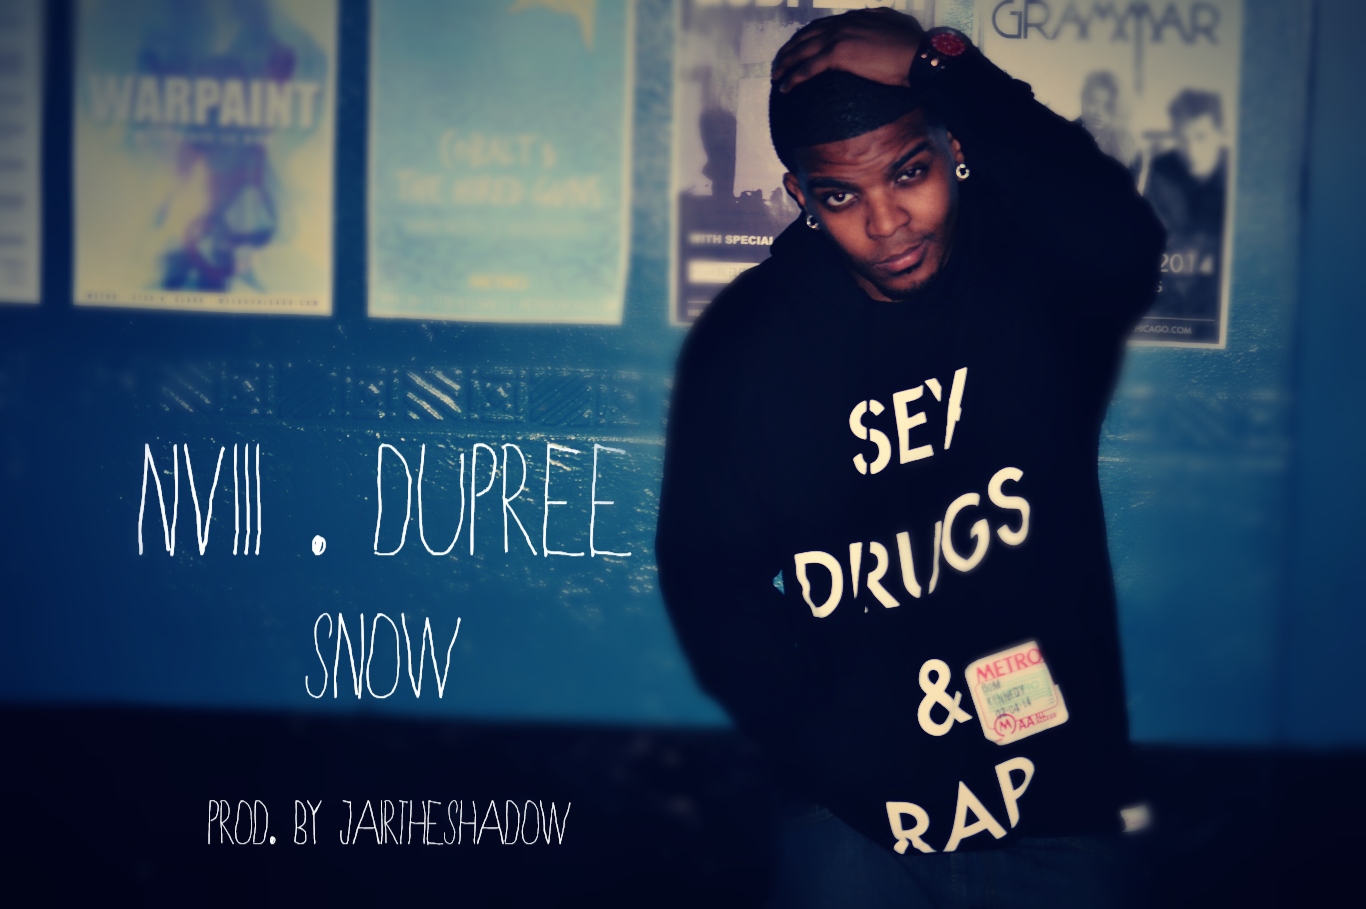 NVIII Dupree "Snow" | @NVIIIDupree @JairTheShadow